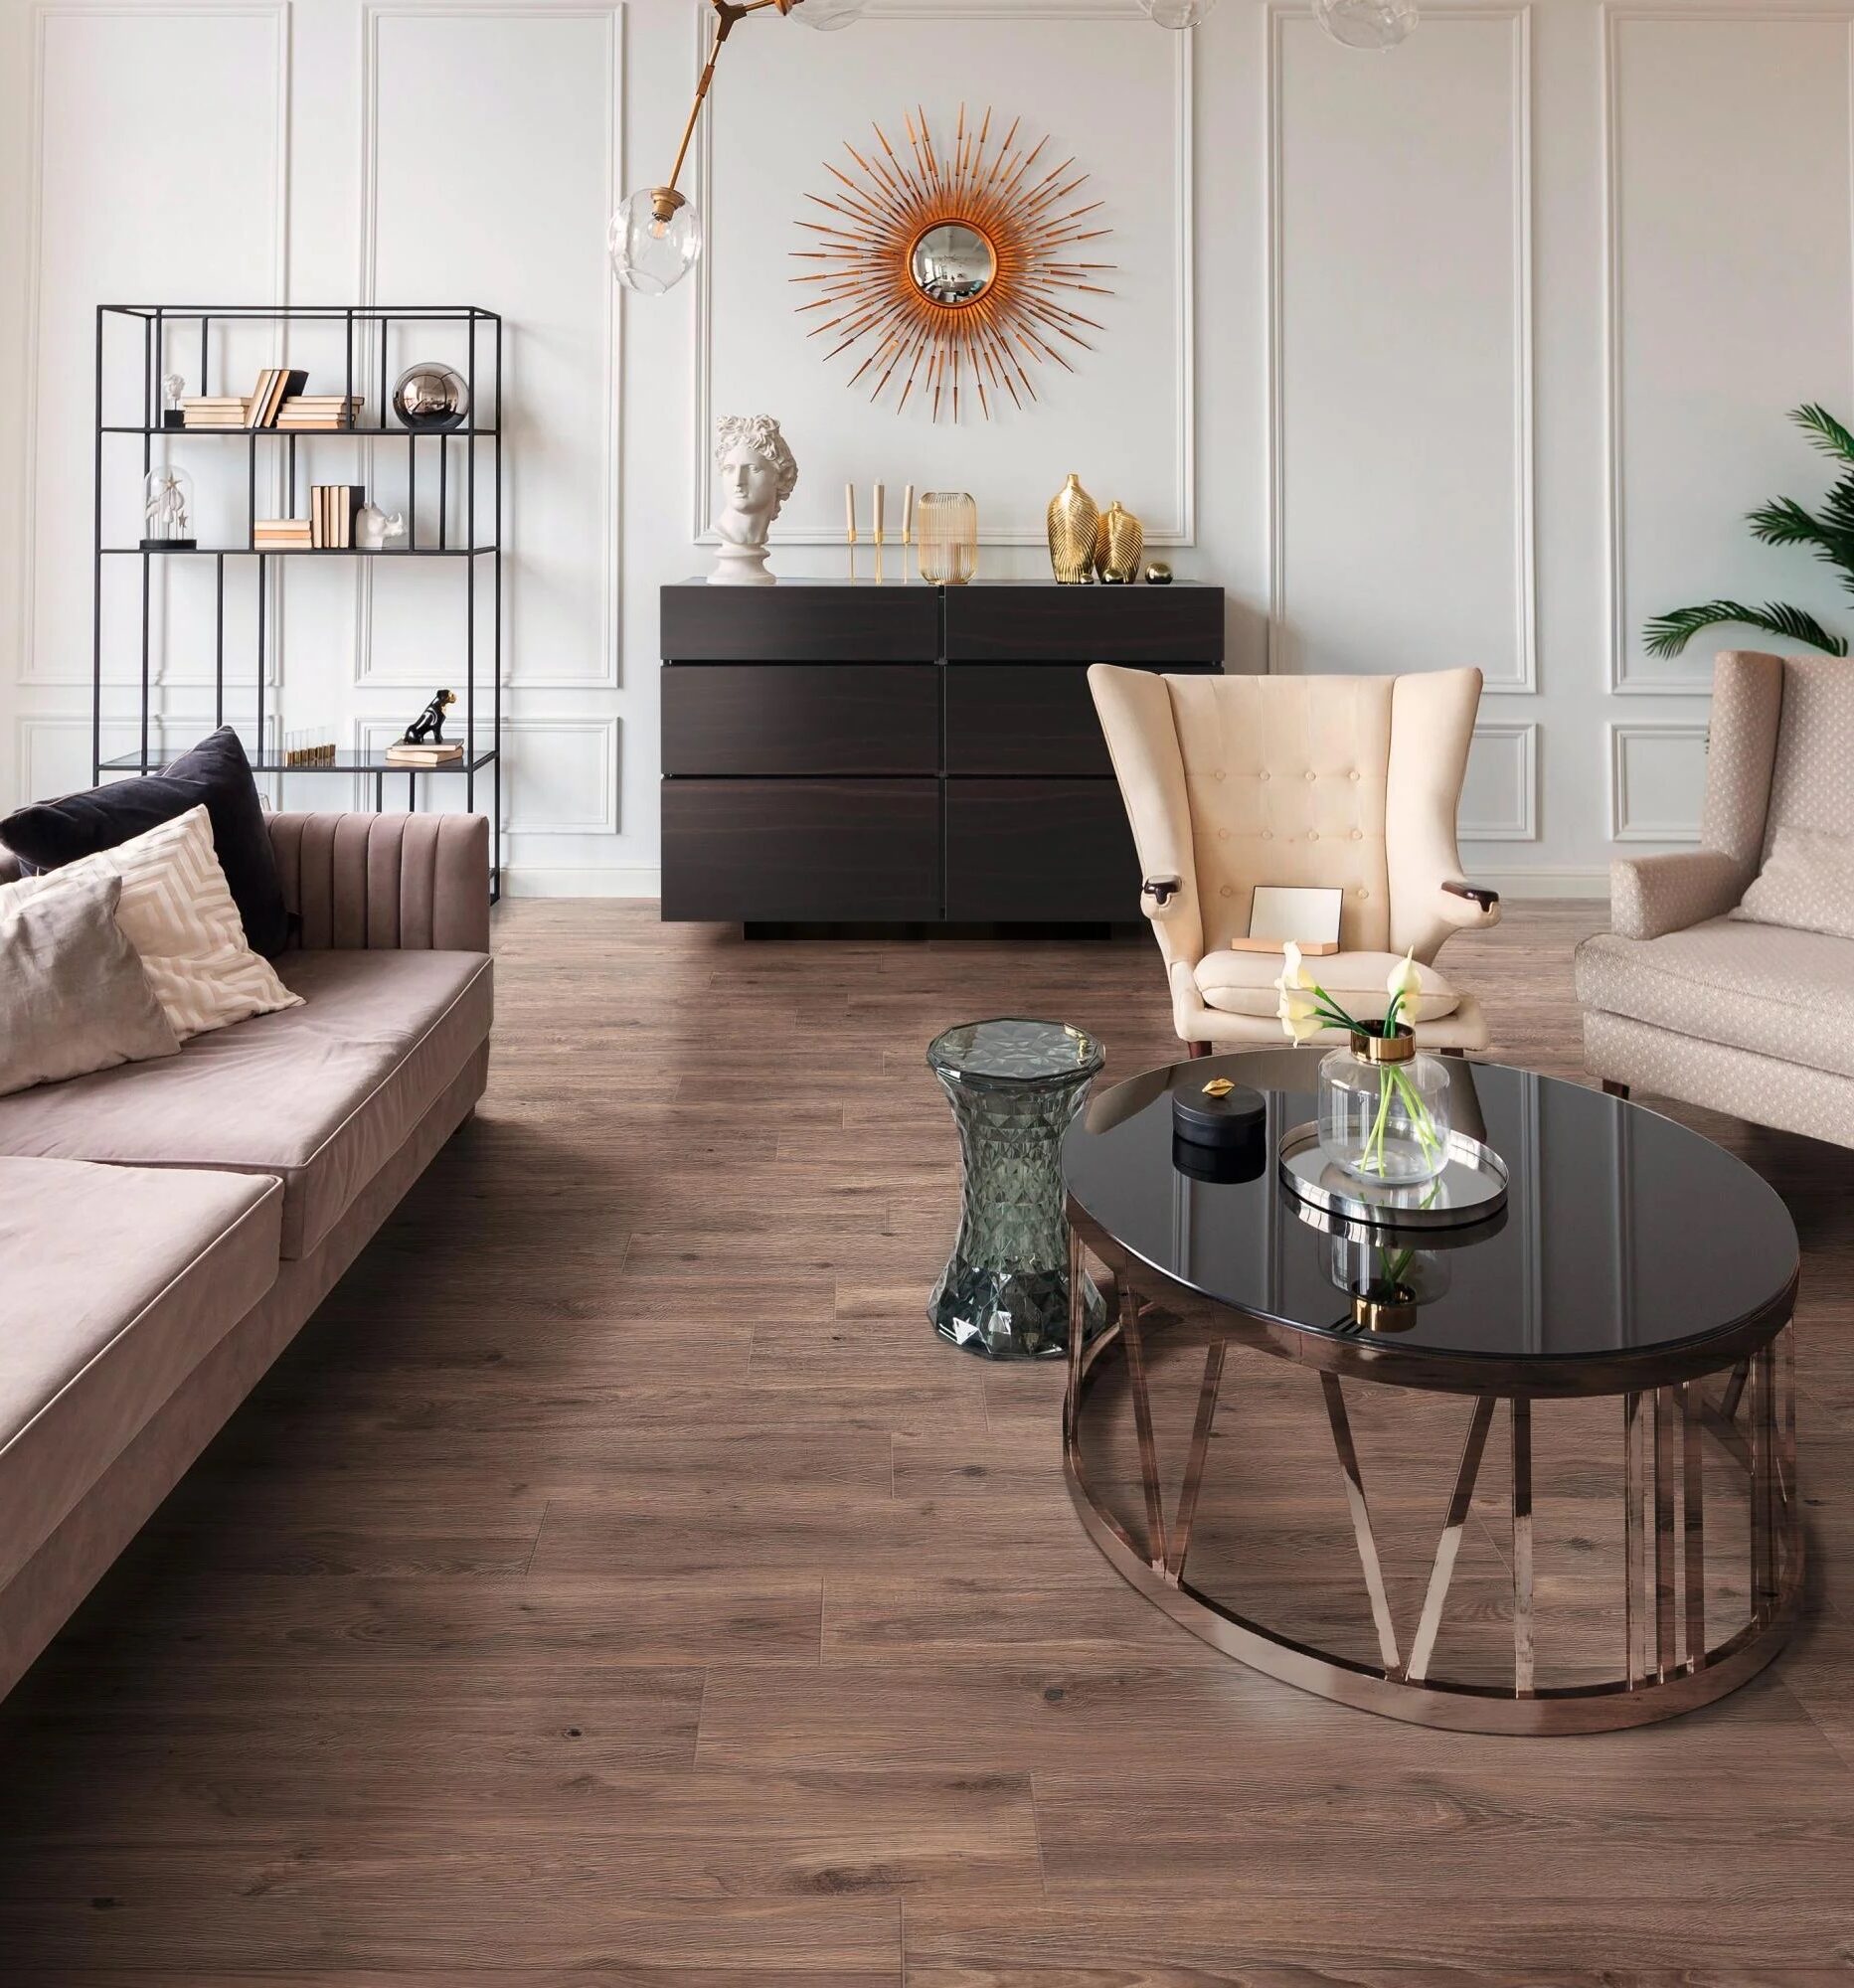 salon elegant luxe moderne canape droit taupe mobilier fer